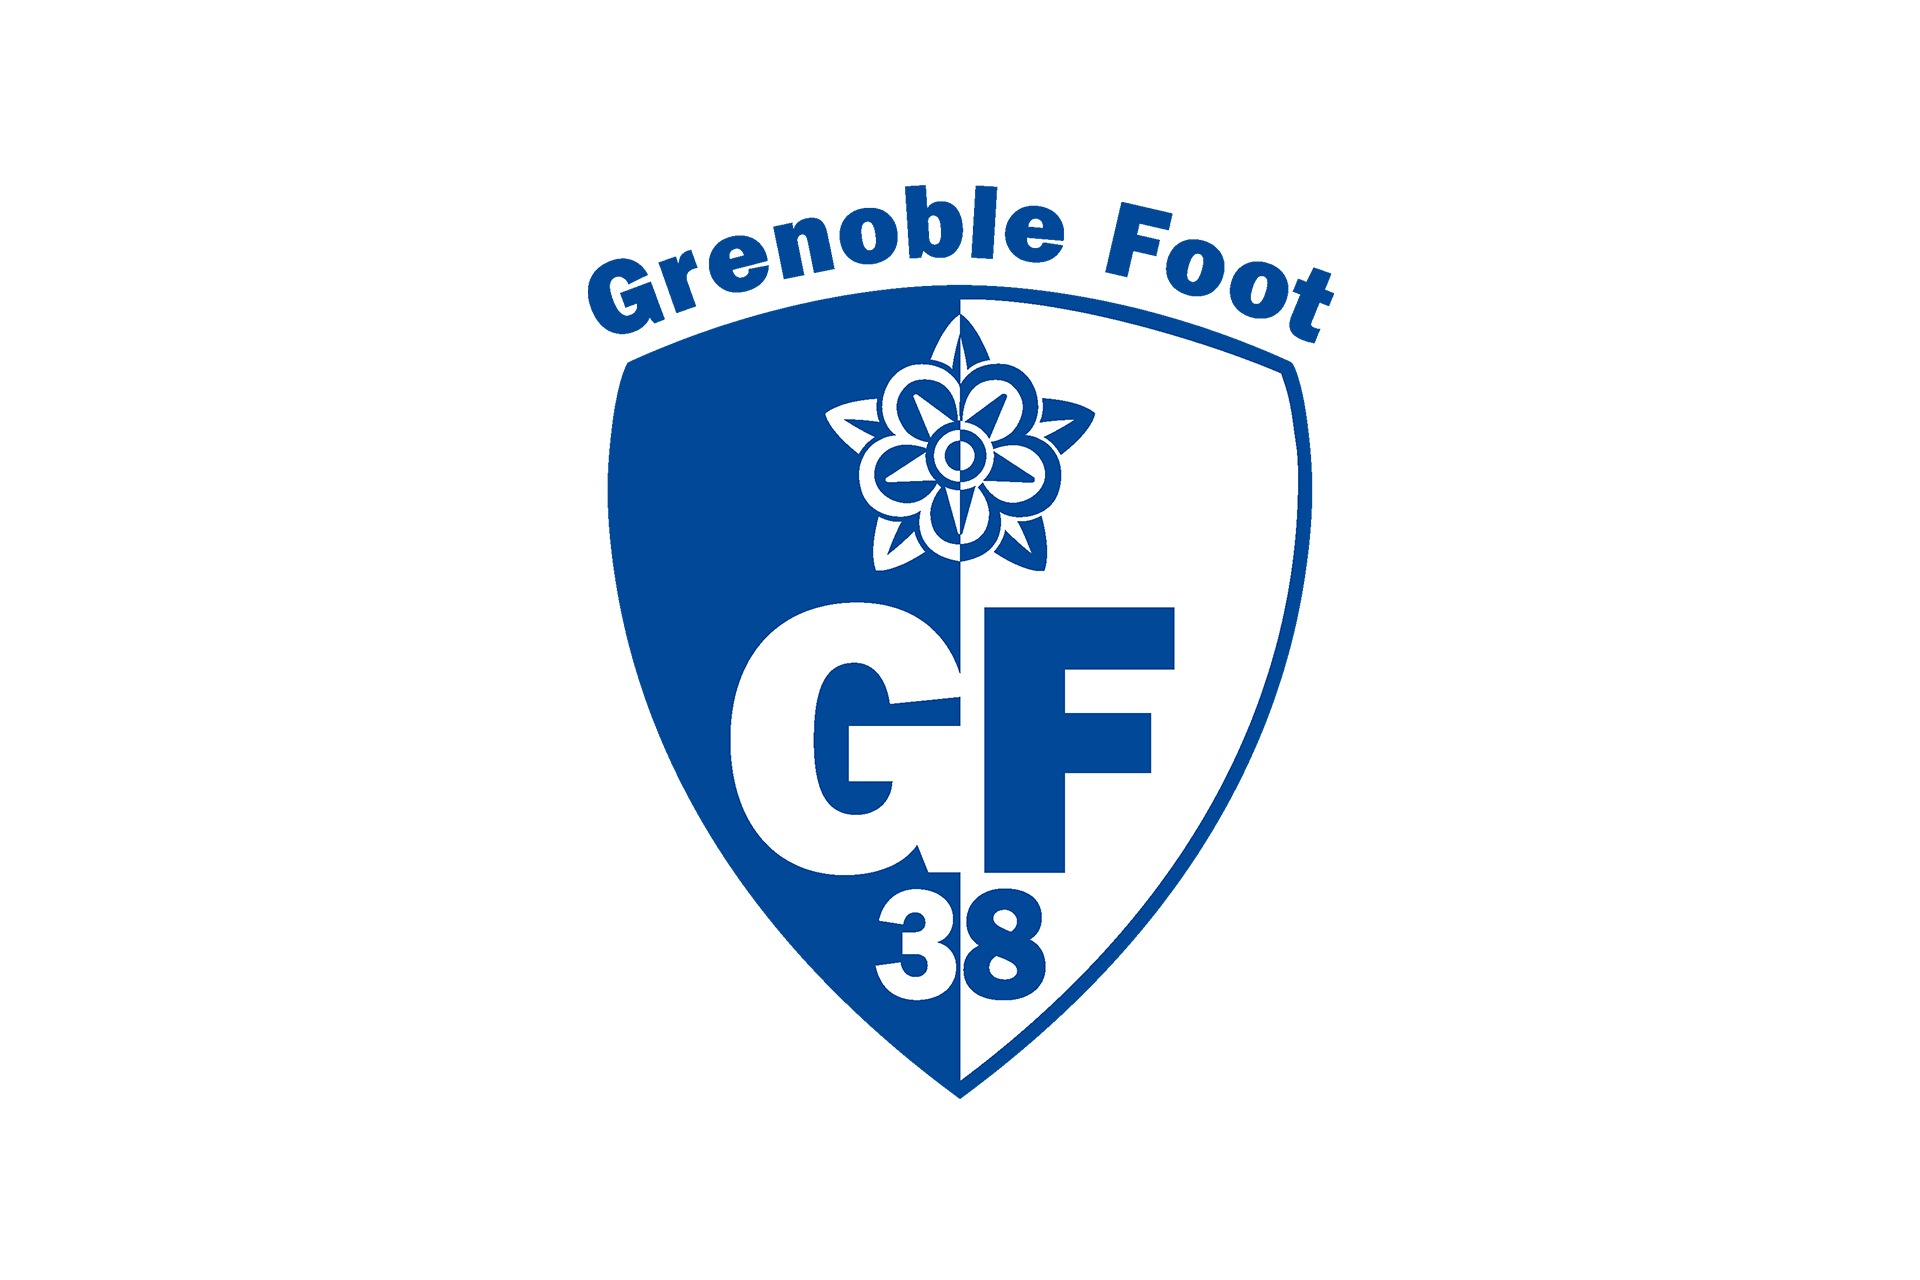 Chamrousse logo partner Grenoble city foot club GF38 mountain resort grenoble isere french alps france - © GF38